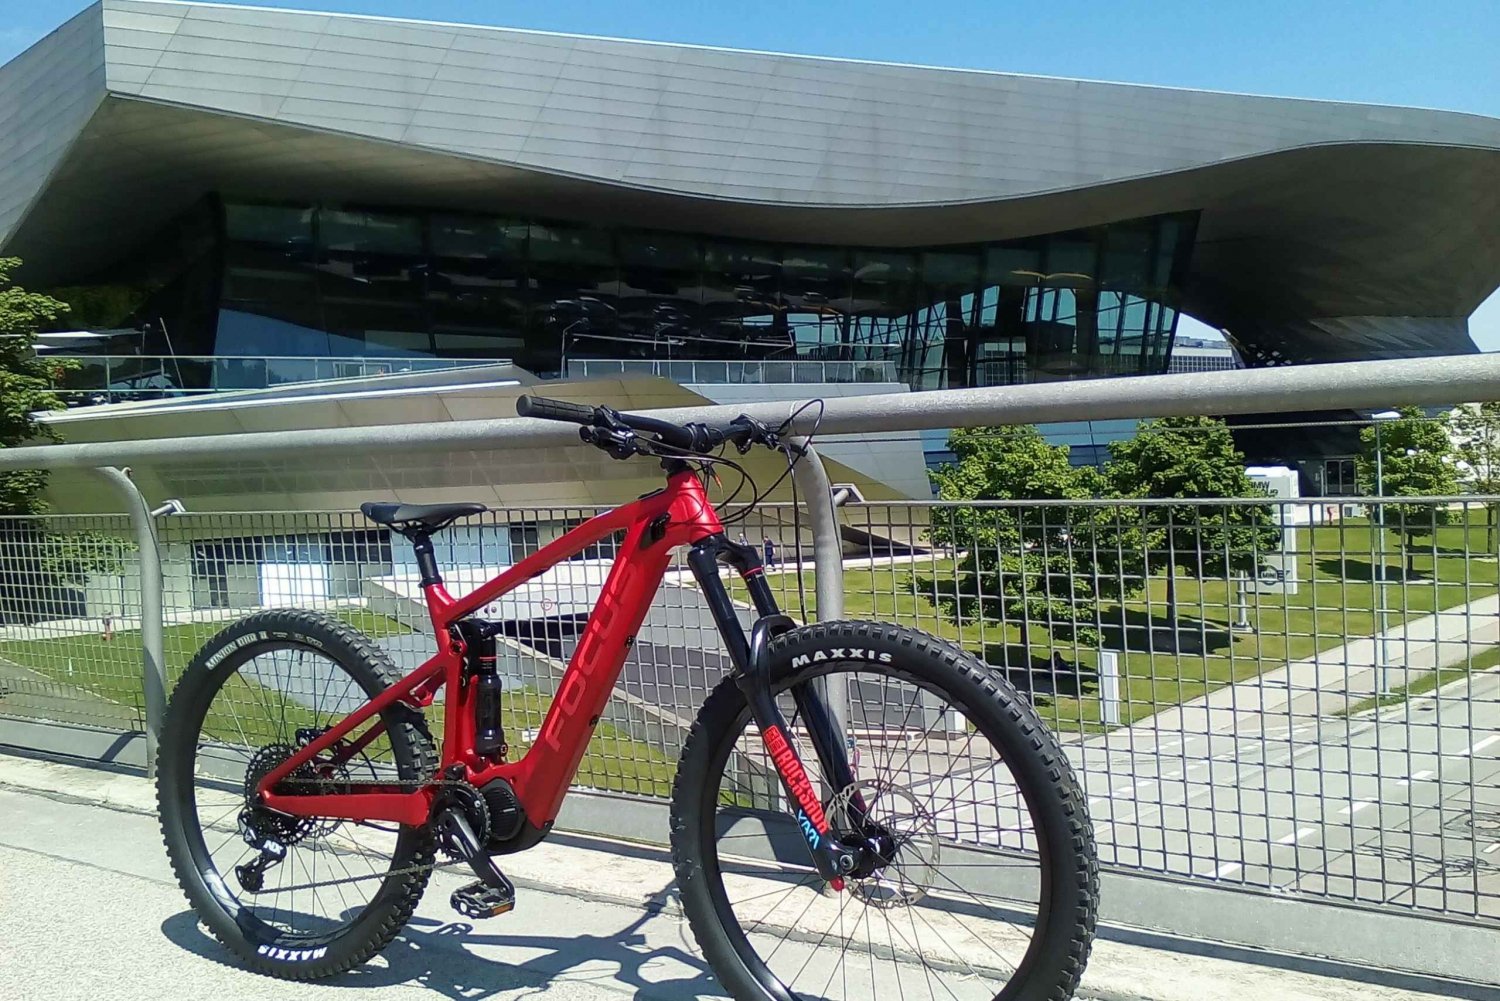 Munich: 4 Hour City Sightseeing Guided E-Bike Tour